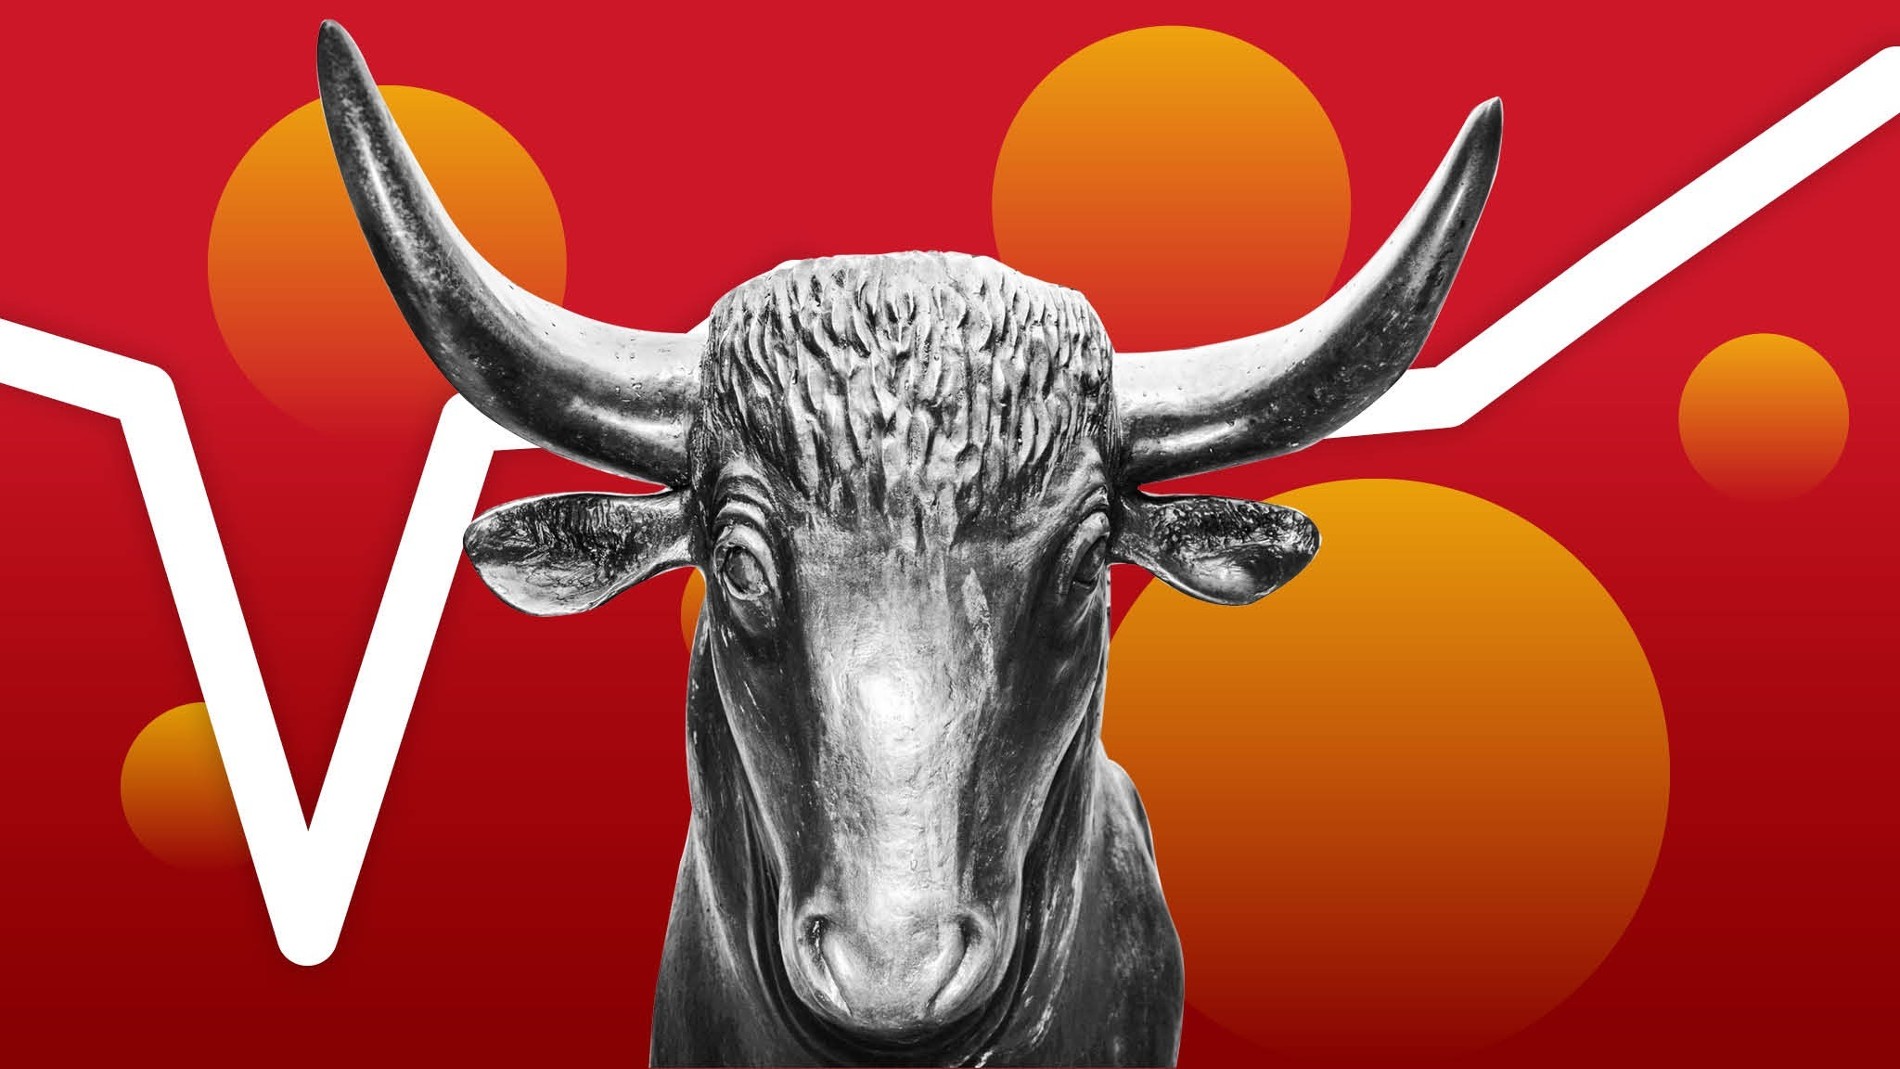 HellasFin: Οι "ταύροι" των αγορών δεν φαίνεται να αναχαιτίζονται